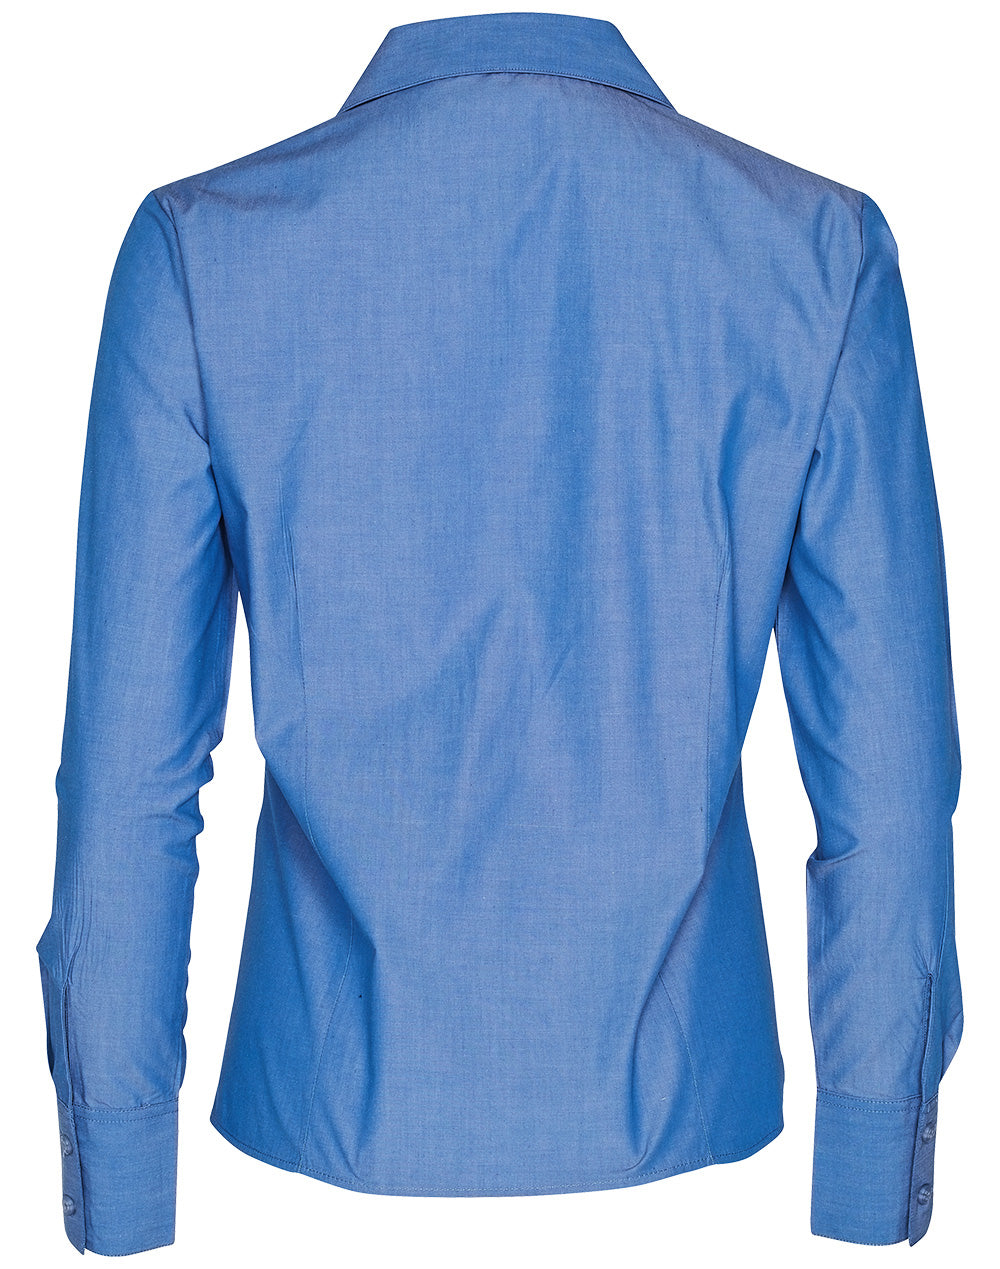 Winning Spirit-Women's Nano ™ Tech Long Sleeve Shirt-M8002